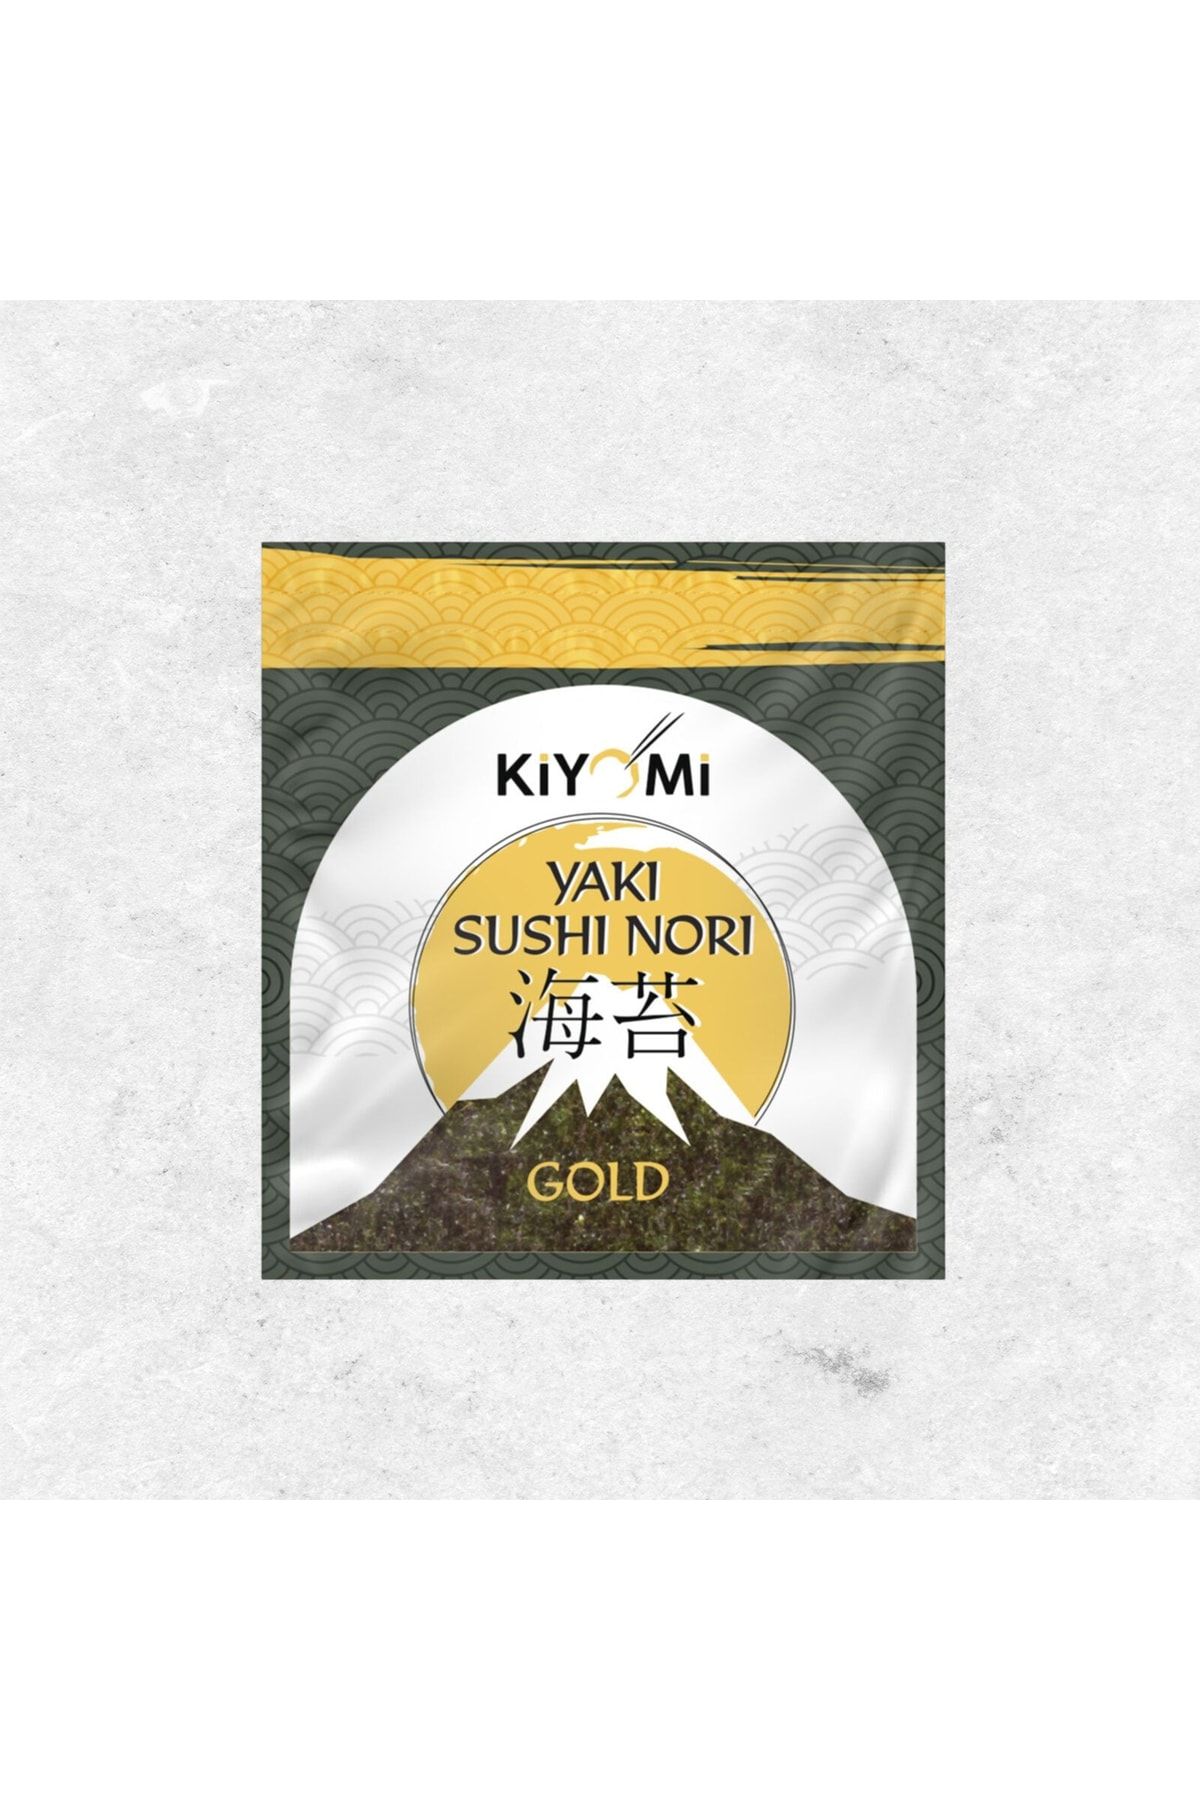 Kiyomi Organik Sushi Yaki Nori Gold- Kurutulmuş Deniz Yosunu 50 Adet